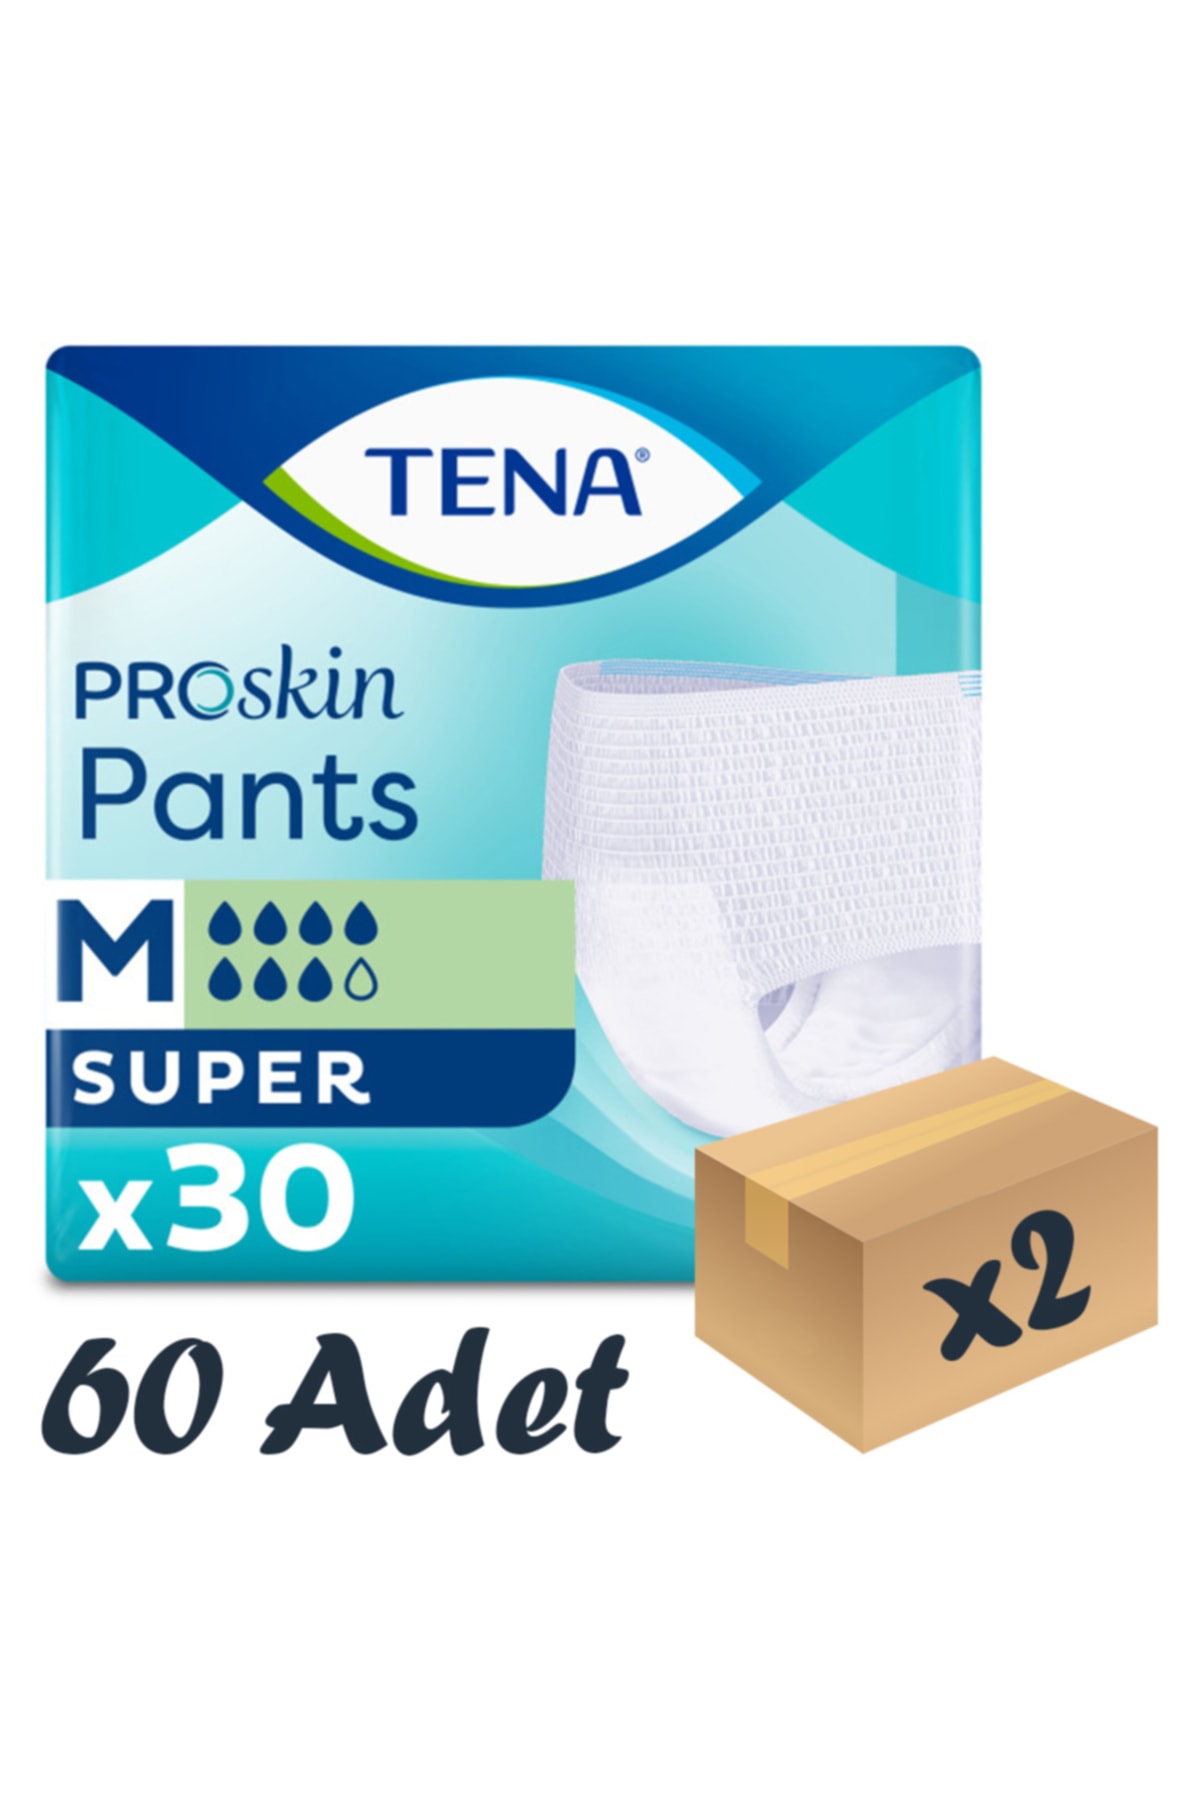 TENA Proskin Pants Super Emici Külot, Orta Boy (m), 7 Damla, 30'lu 2 Paket 60 Adet